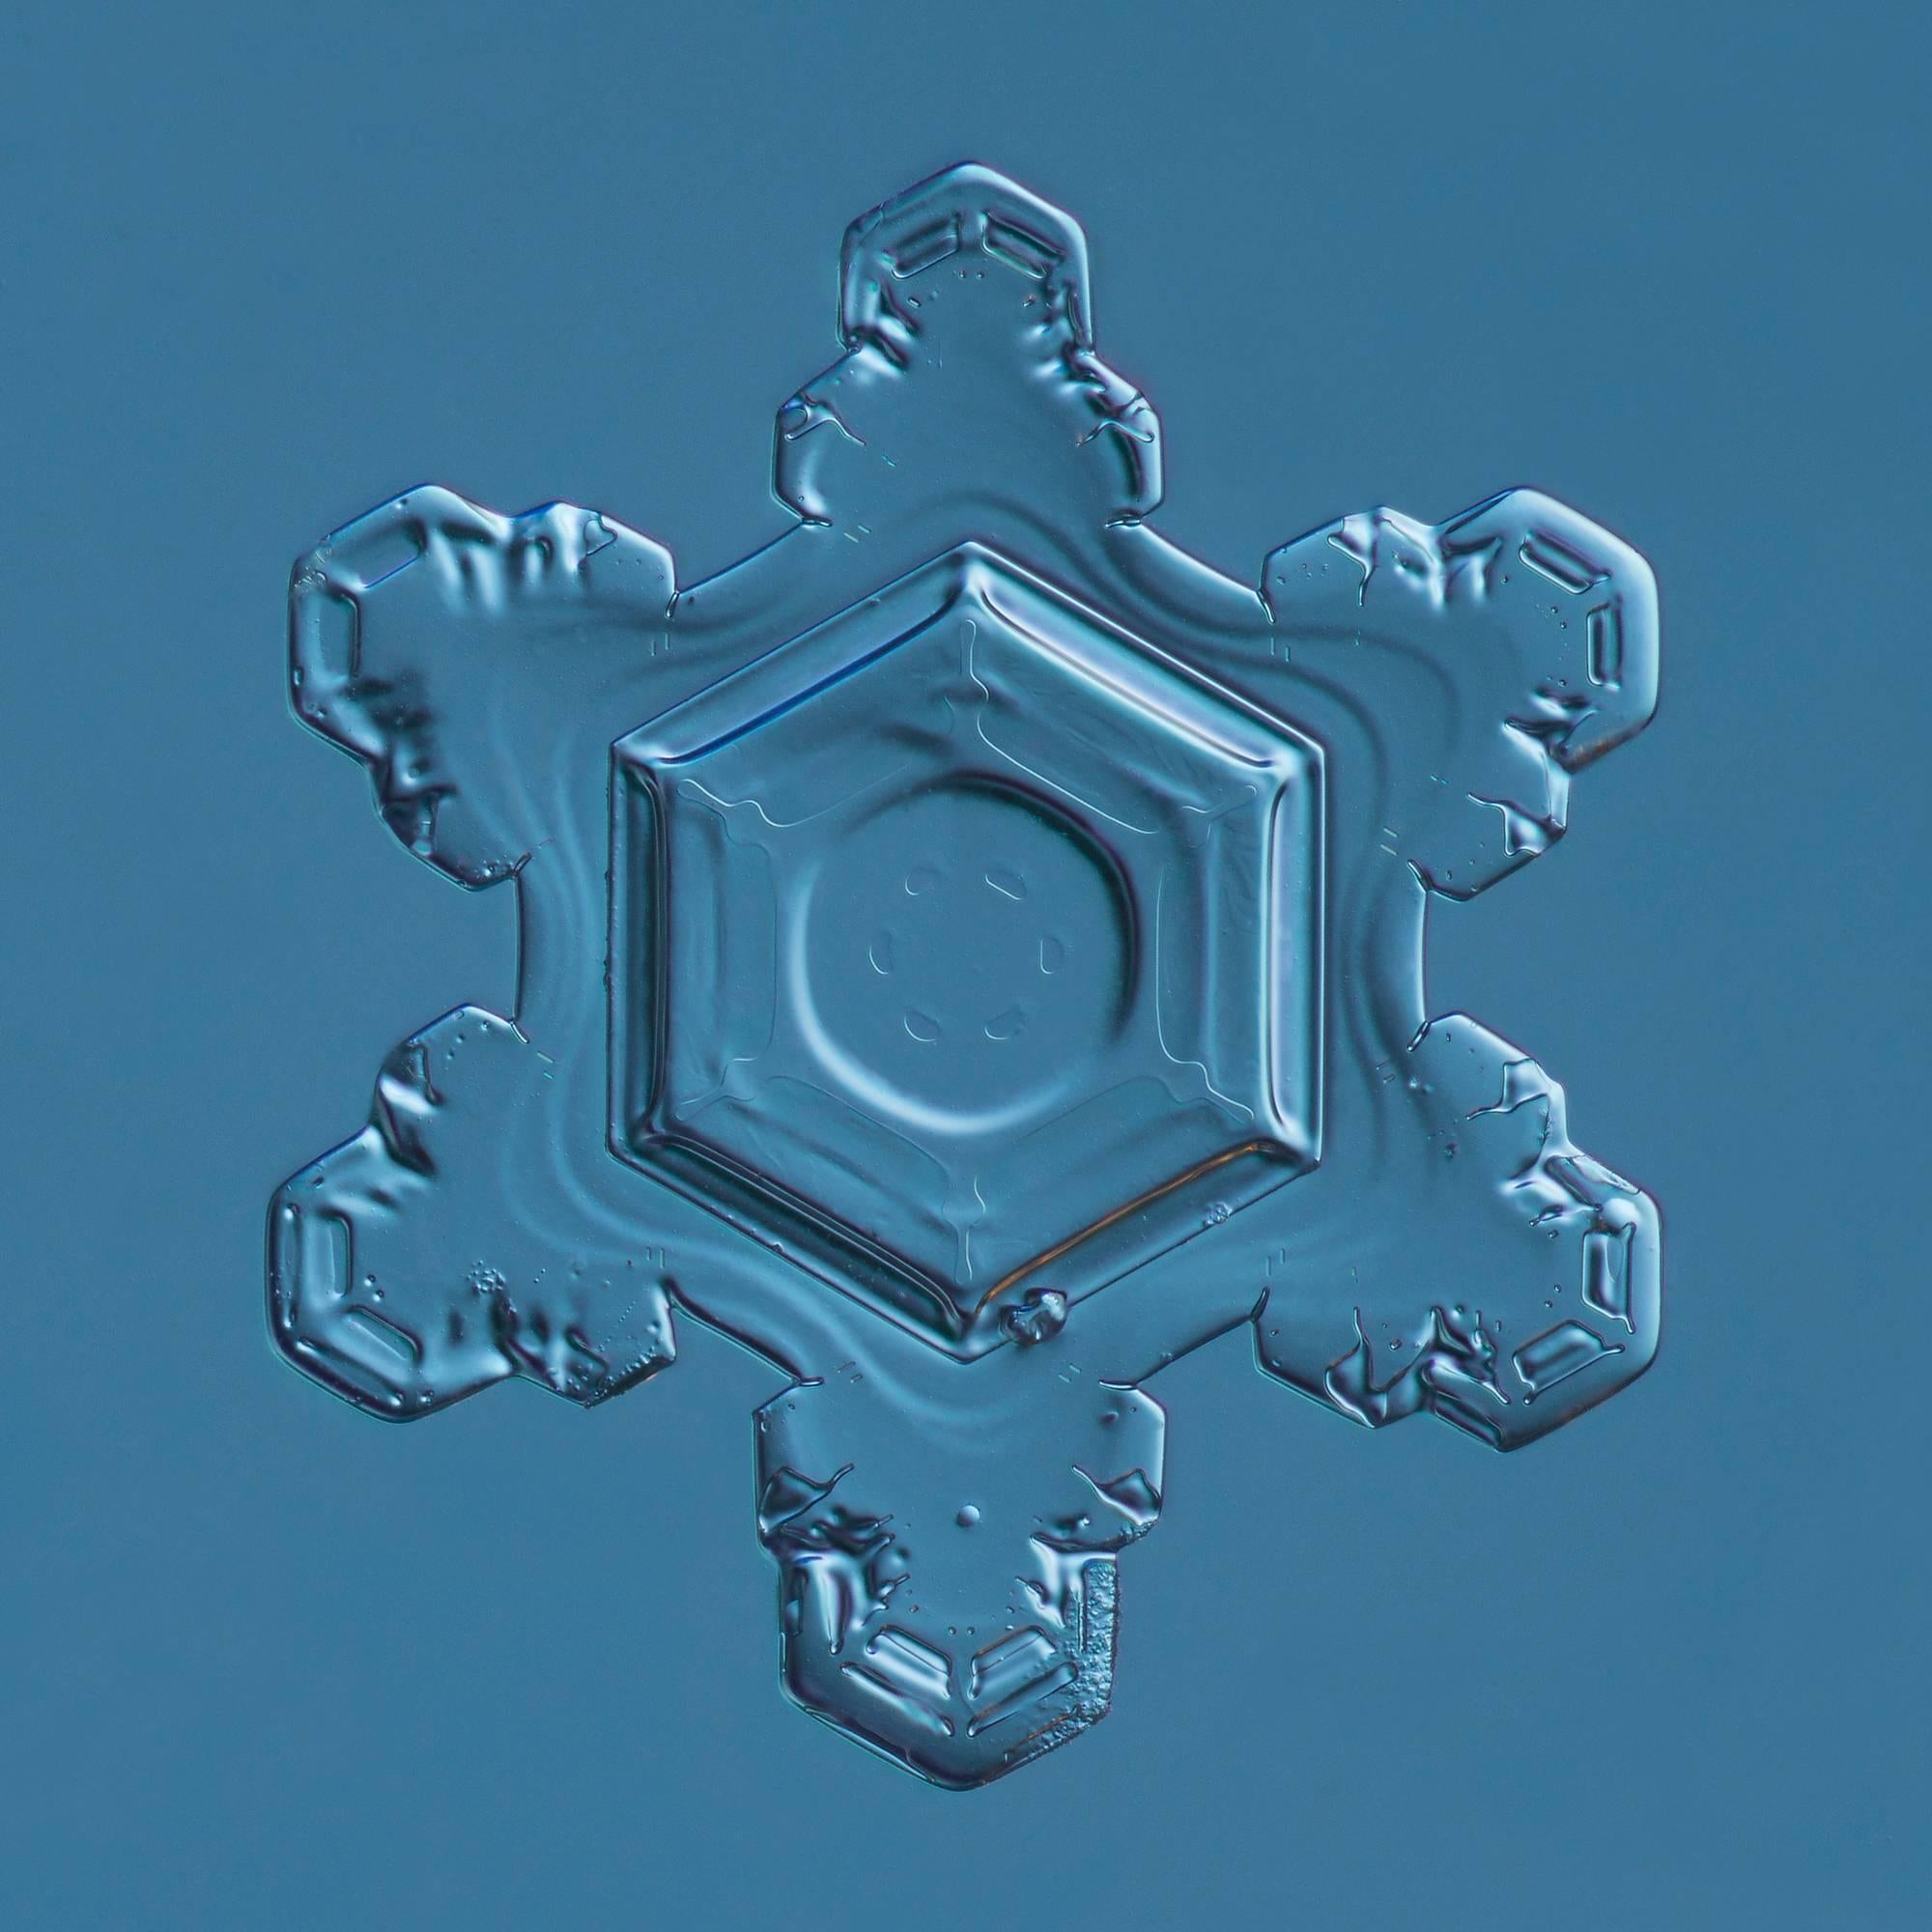 Snowflake 2015.02.25.003  - Photograph by Douglas Levere